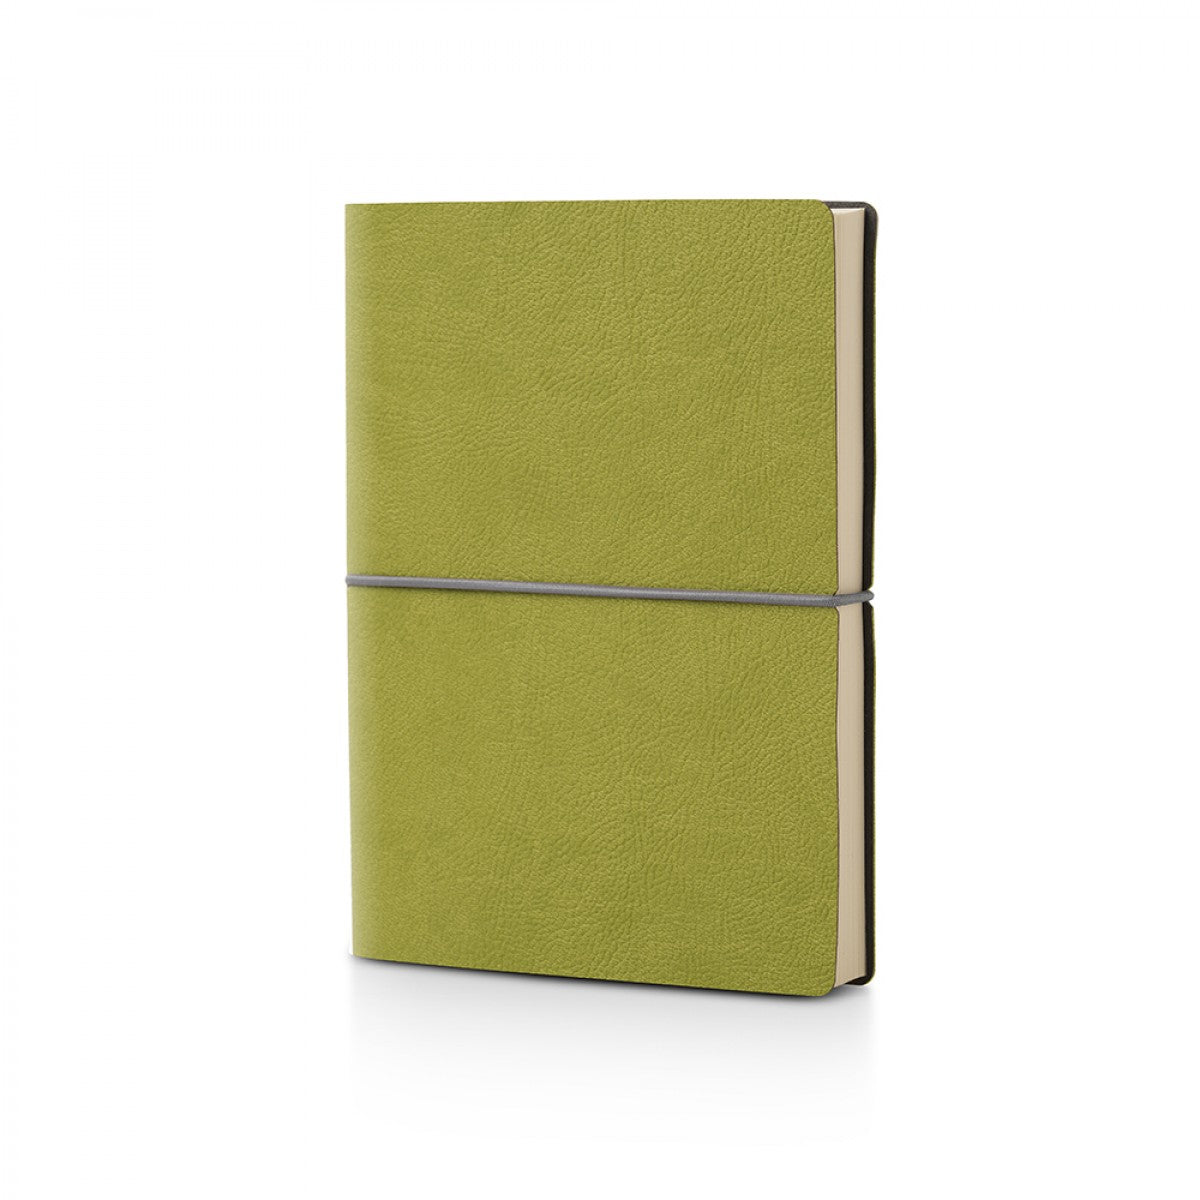 Ciak Smartbook Note Book Green 5" by 7"